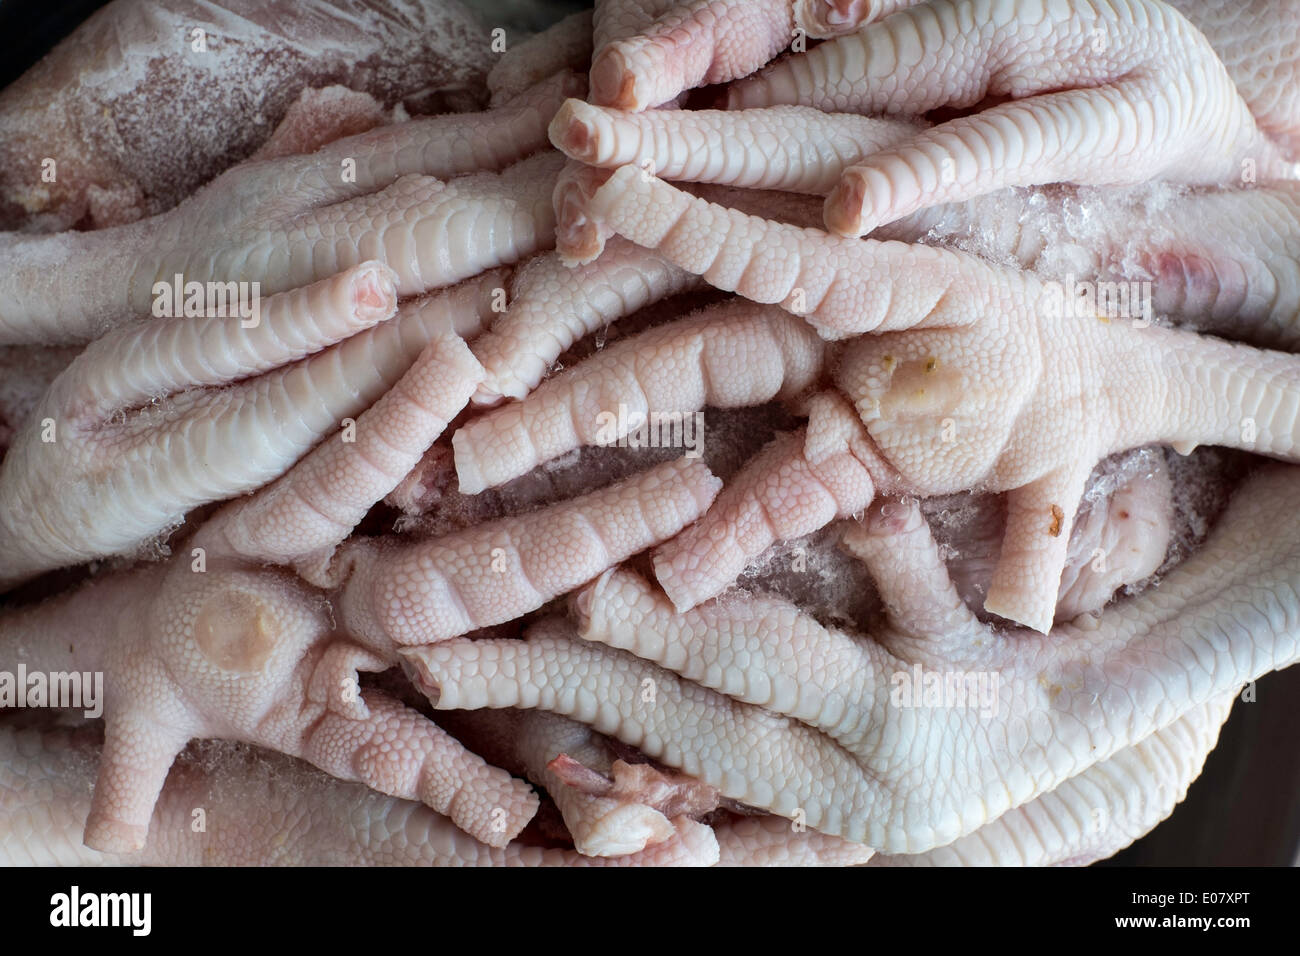 Patas de pollo congeladas fotografías e imágenes de alta resolución - Alamy